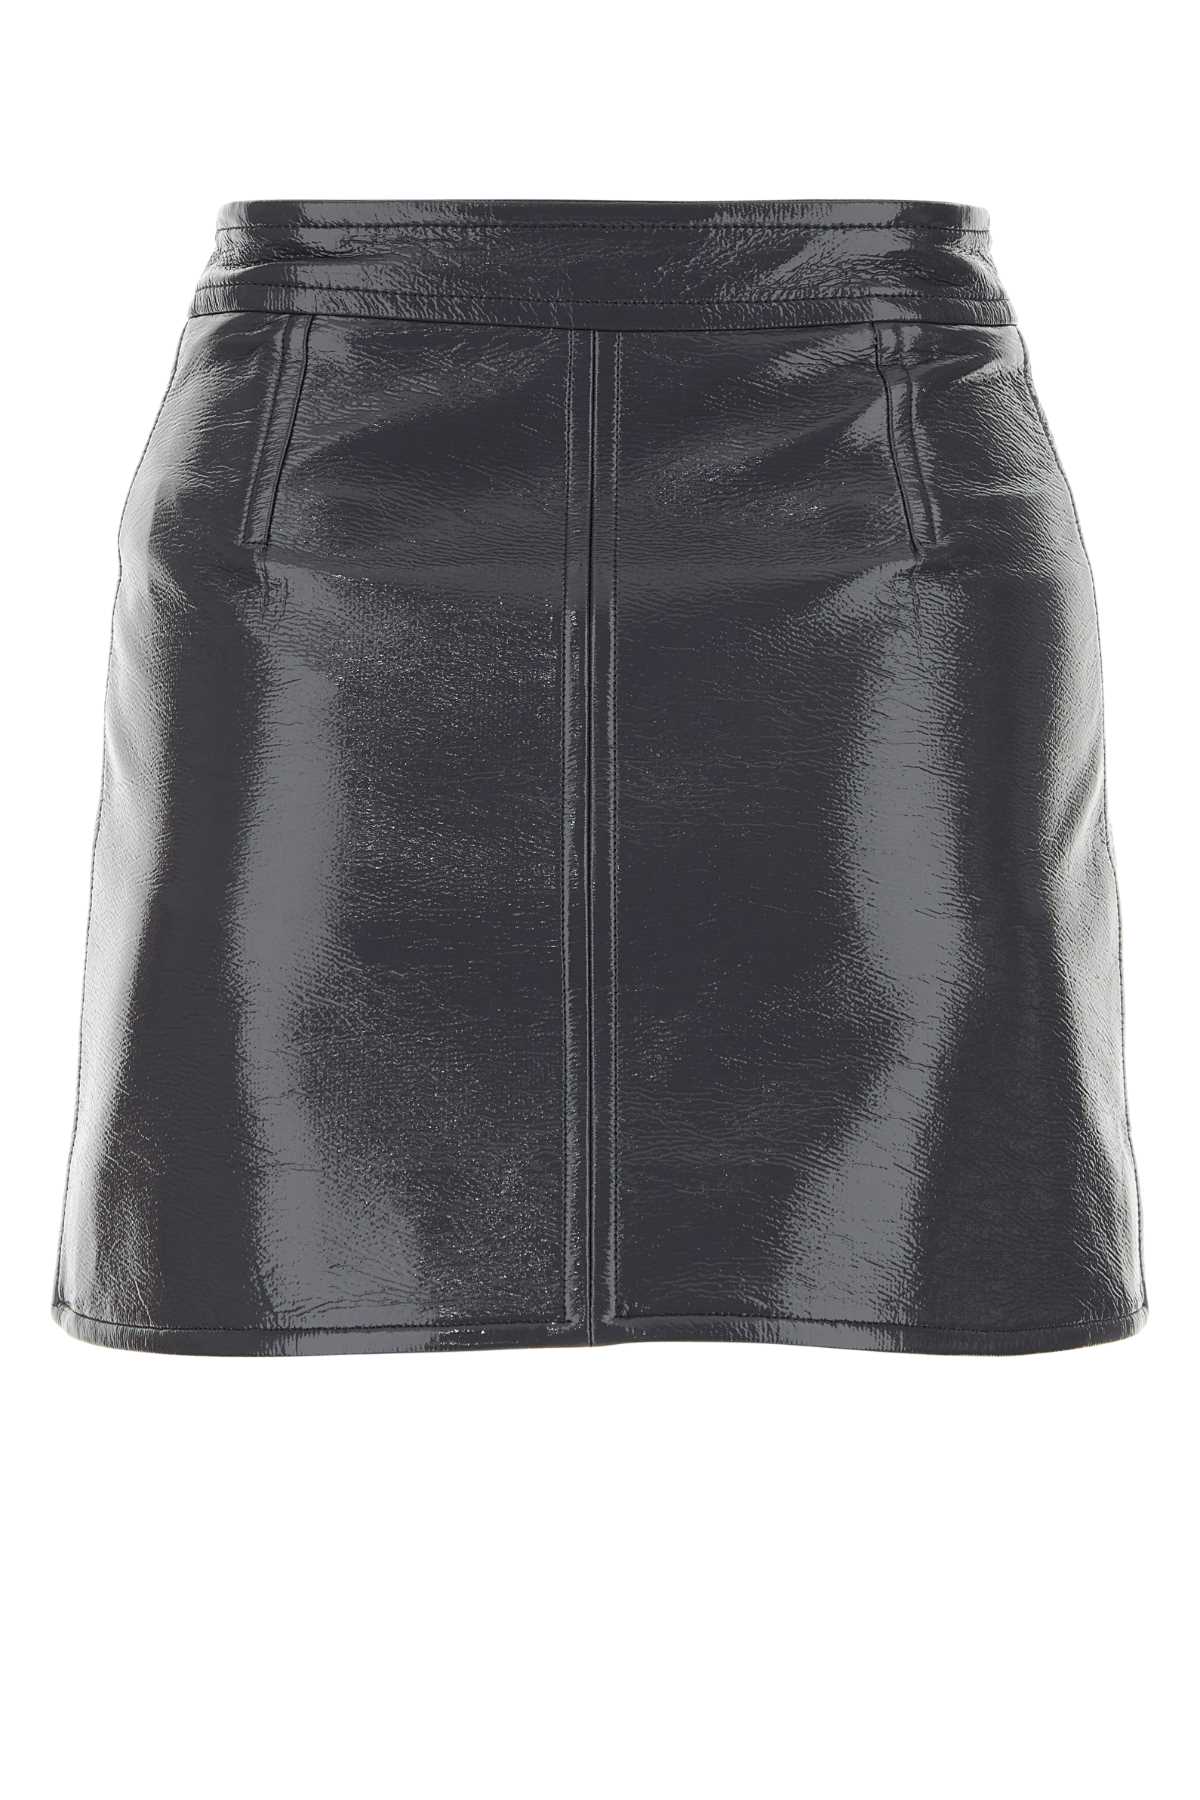 Courrèges Black Vinyl Mini Skirt In Steelgrey